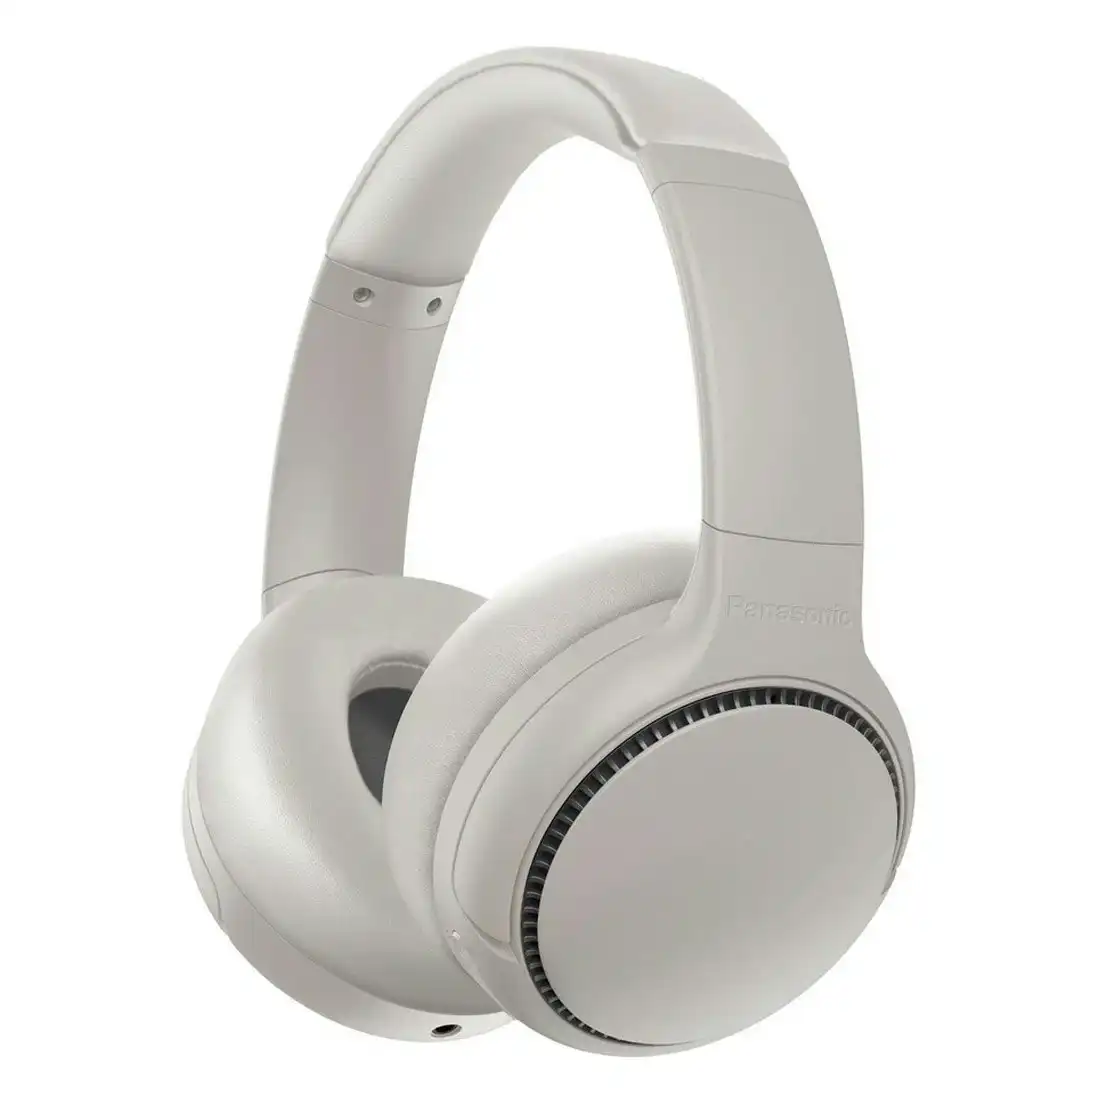 Panasonic Deep Bass Wireless Headphones RB-M500 - Beige